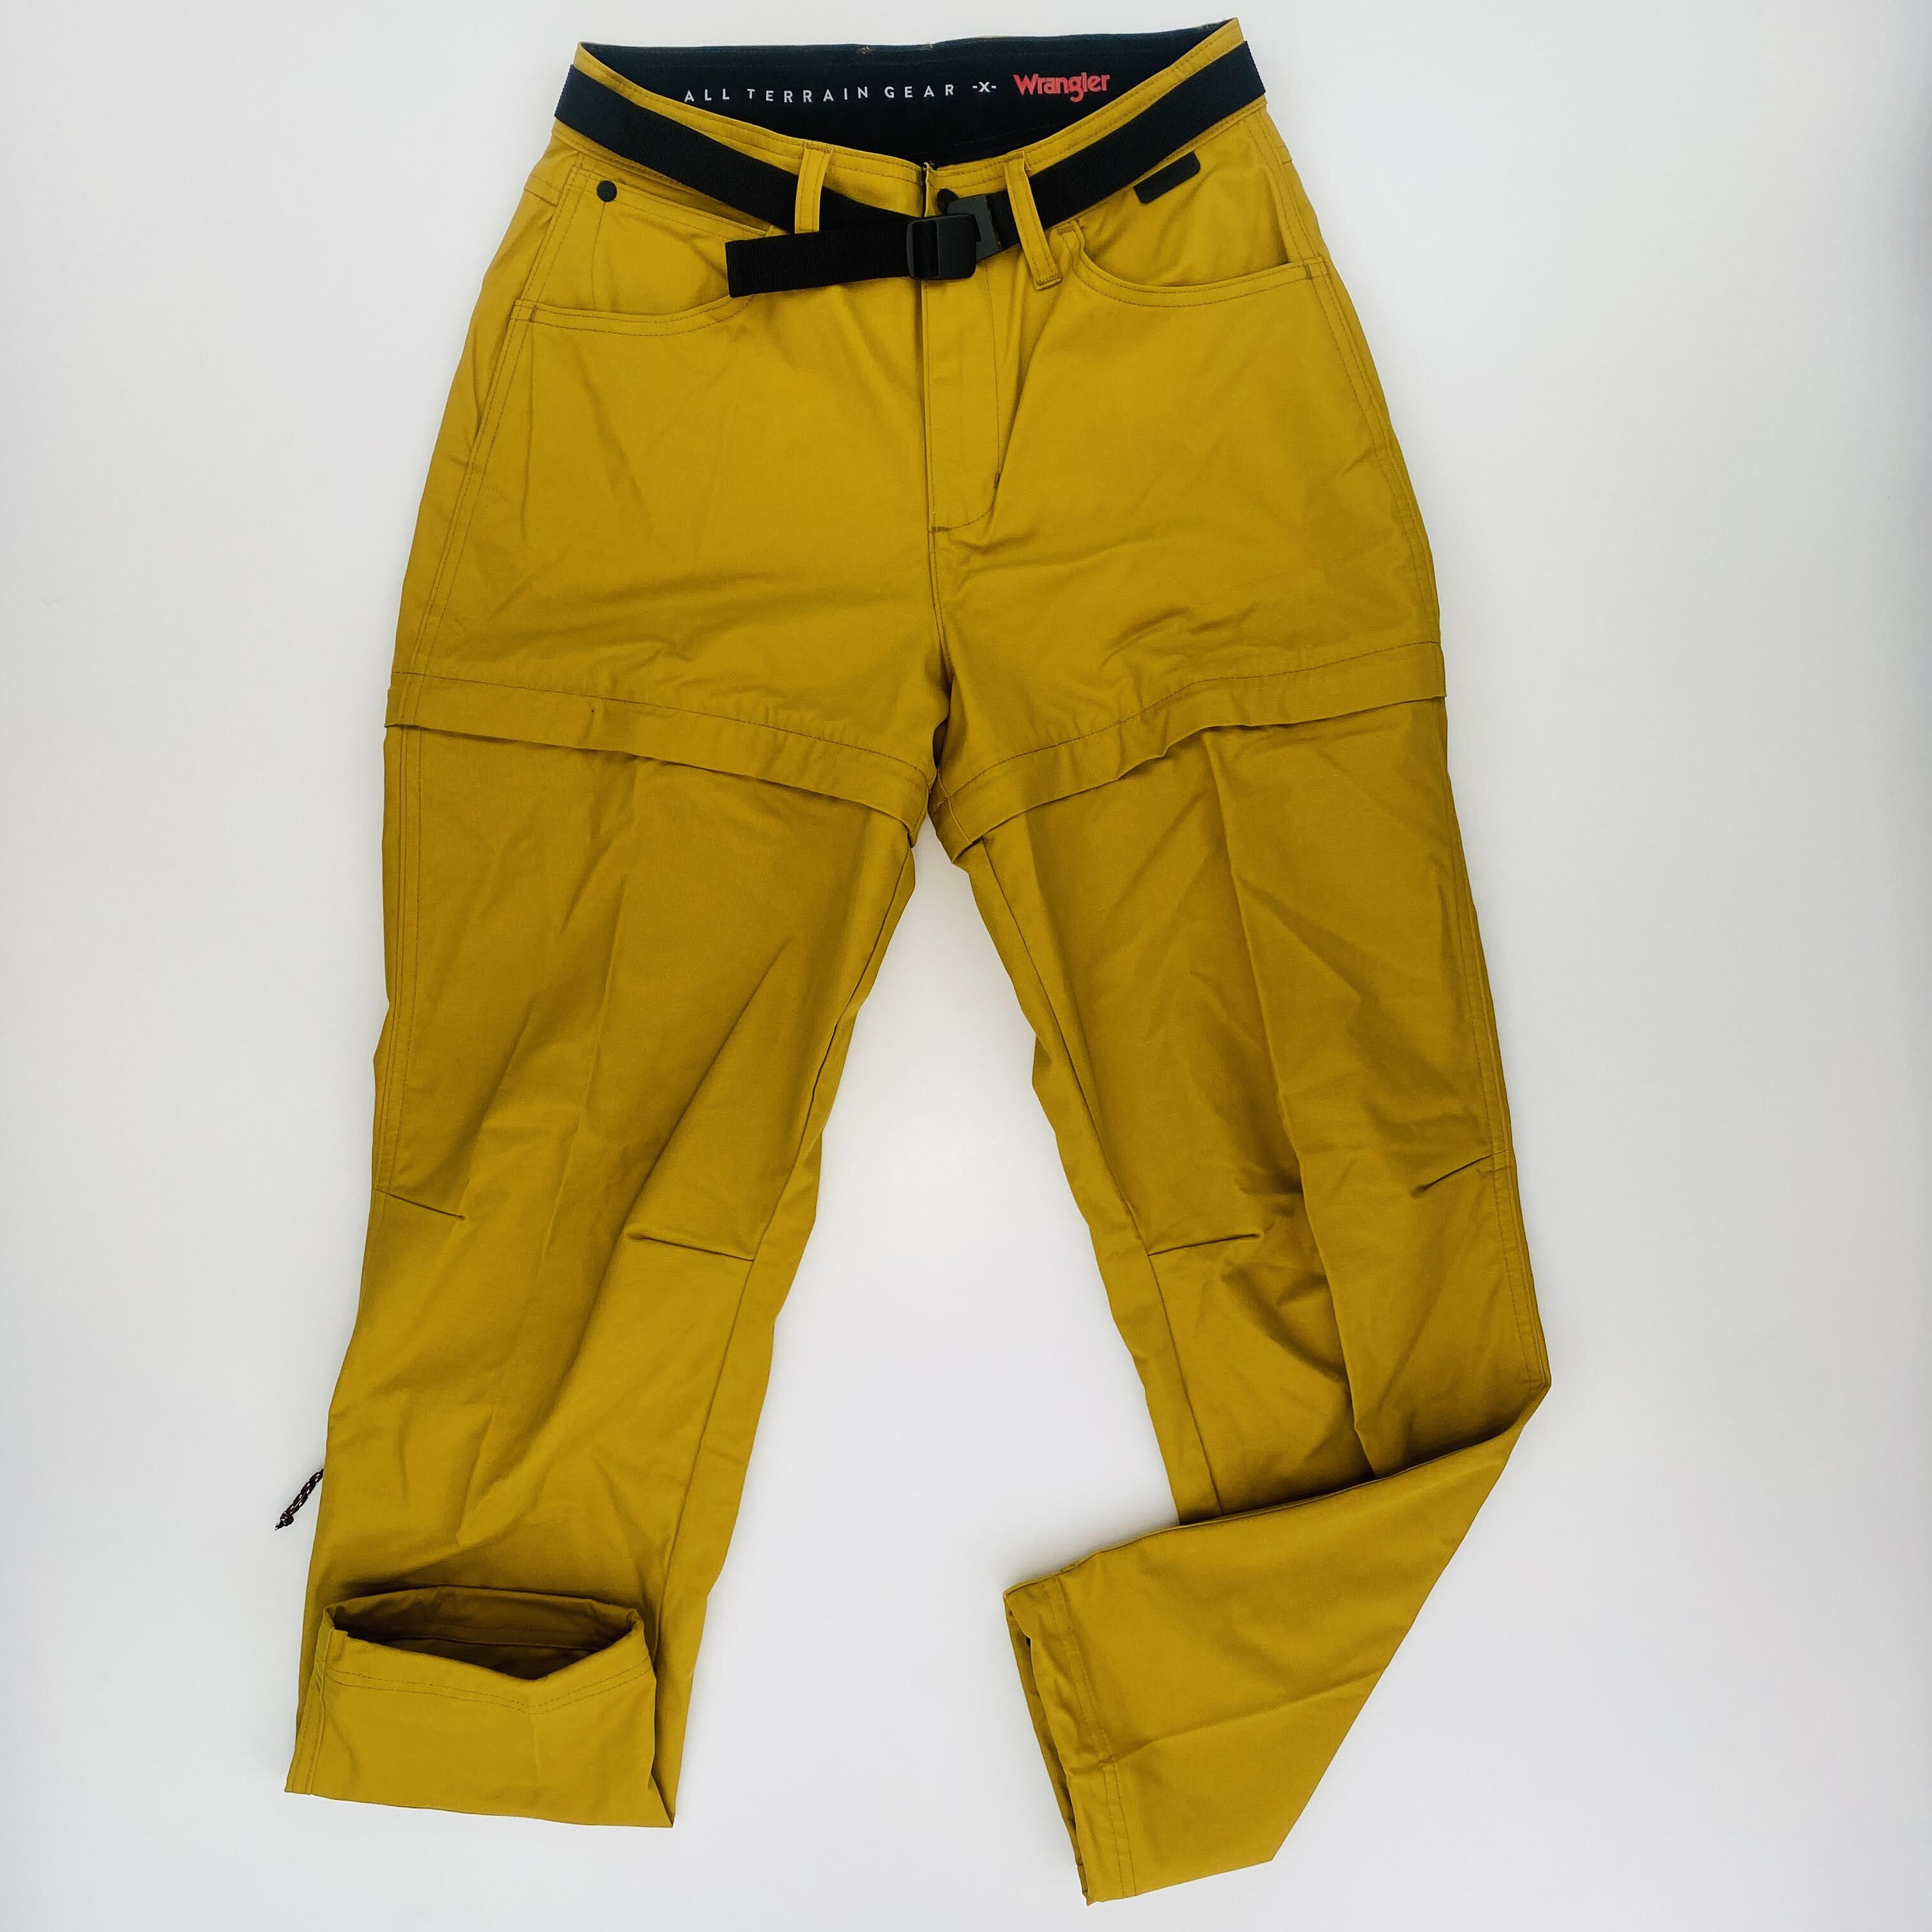 Wrangler Packable Zipoff Pant - Seconde main Pantalon randonnée femme - Jaune - US 28 | Hardloop